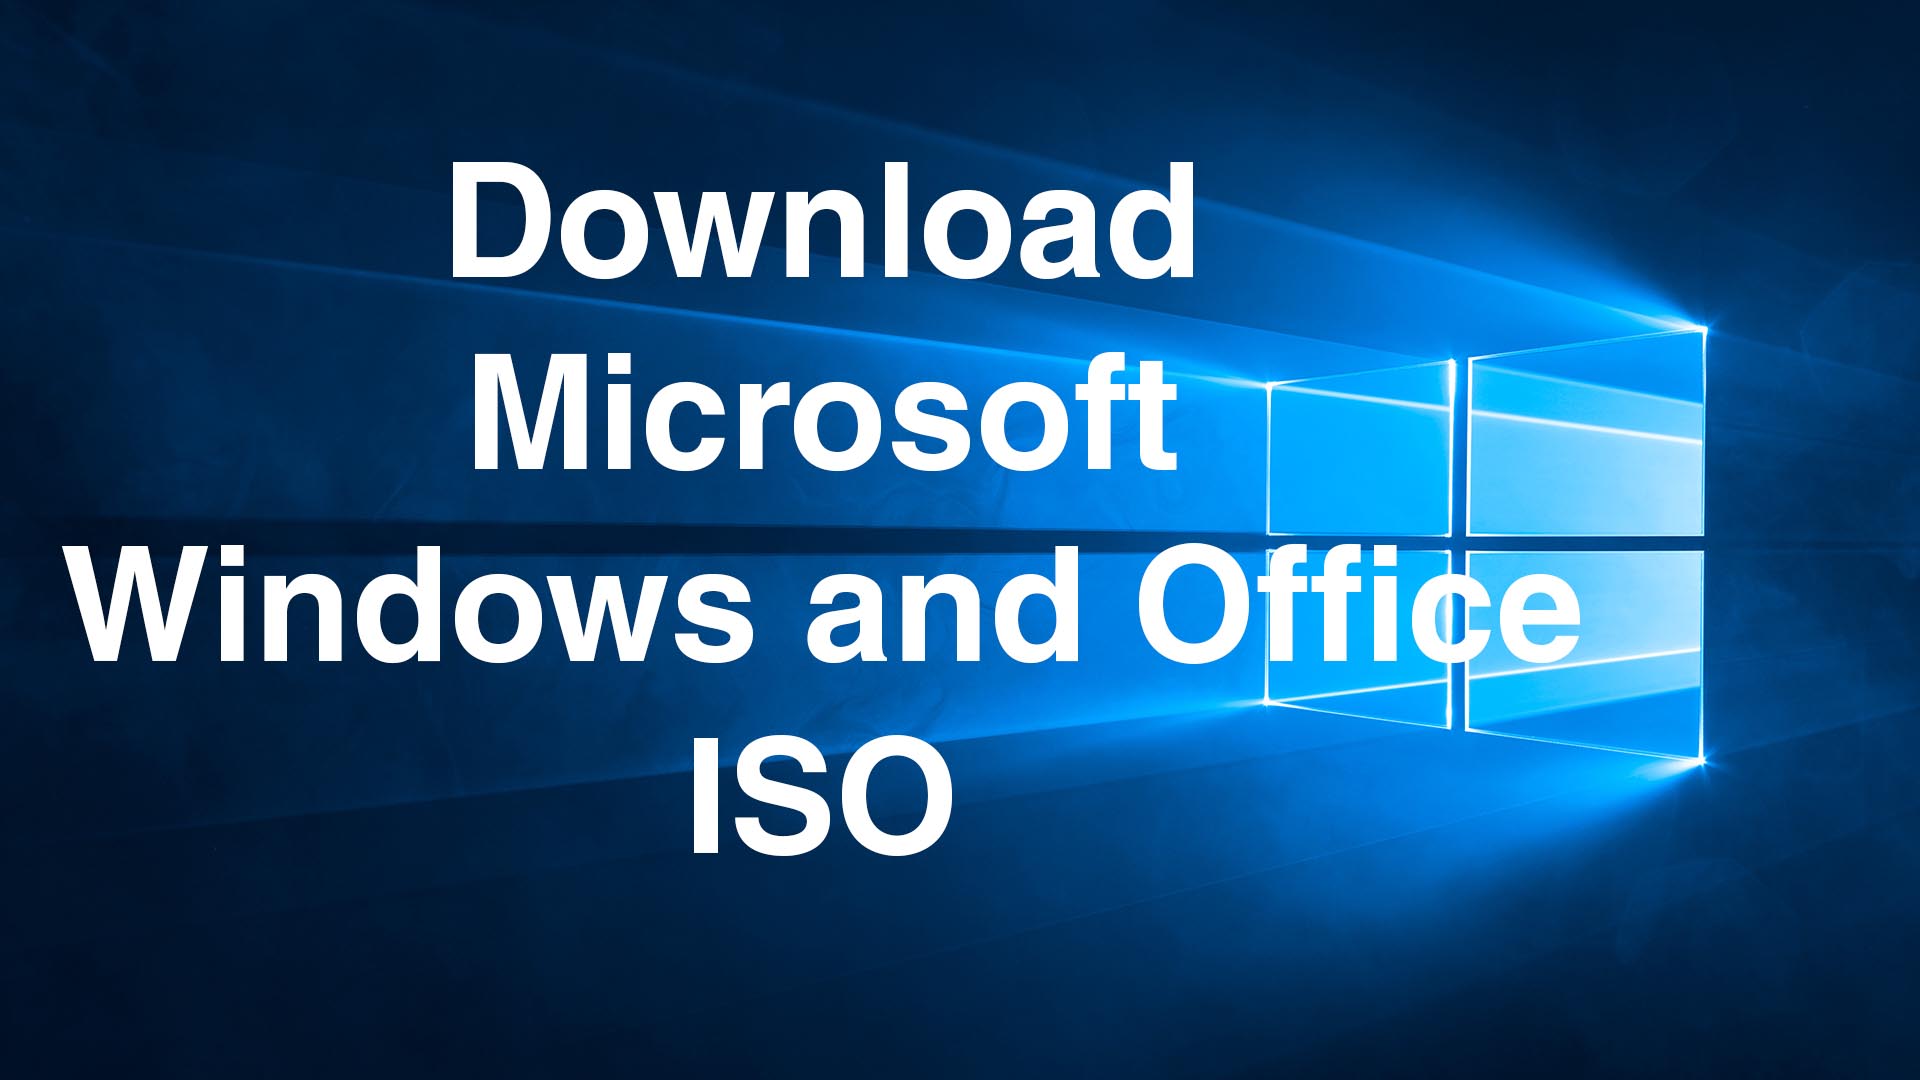 Microsoft windows mirrpr iso download free